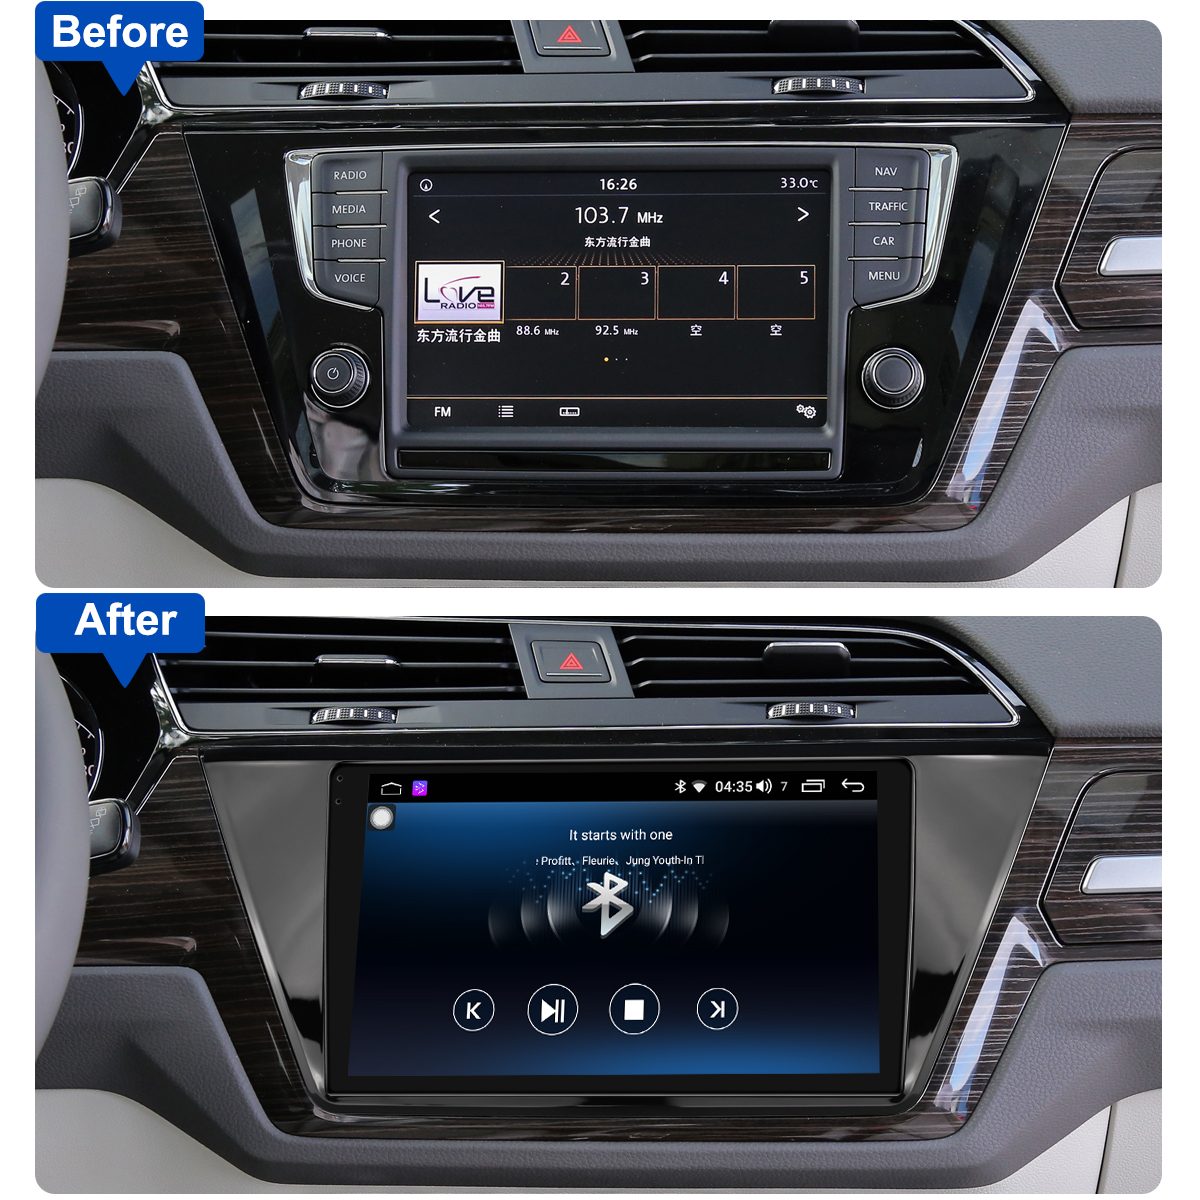 Joying 10.1 inch Big Screen Upgrade Radio for Volkswagen